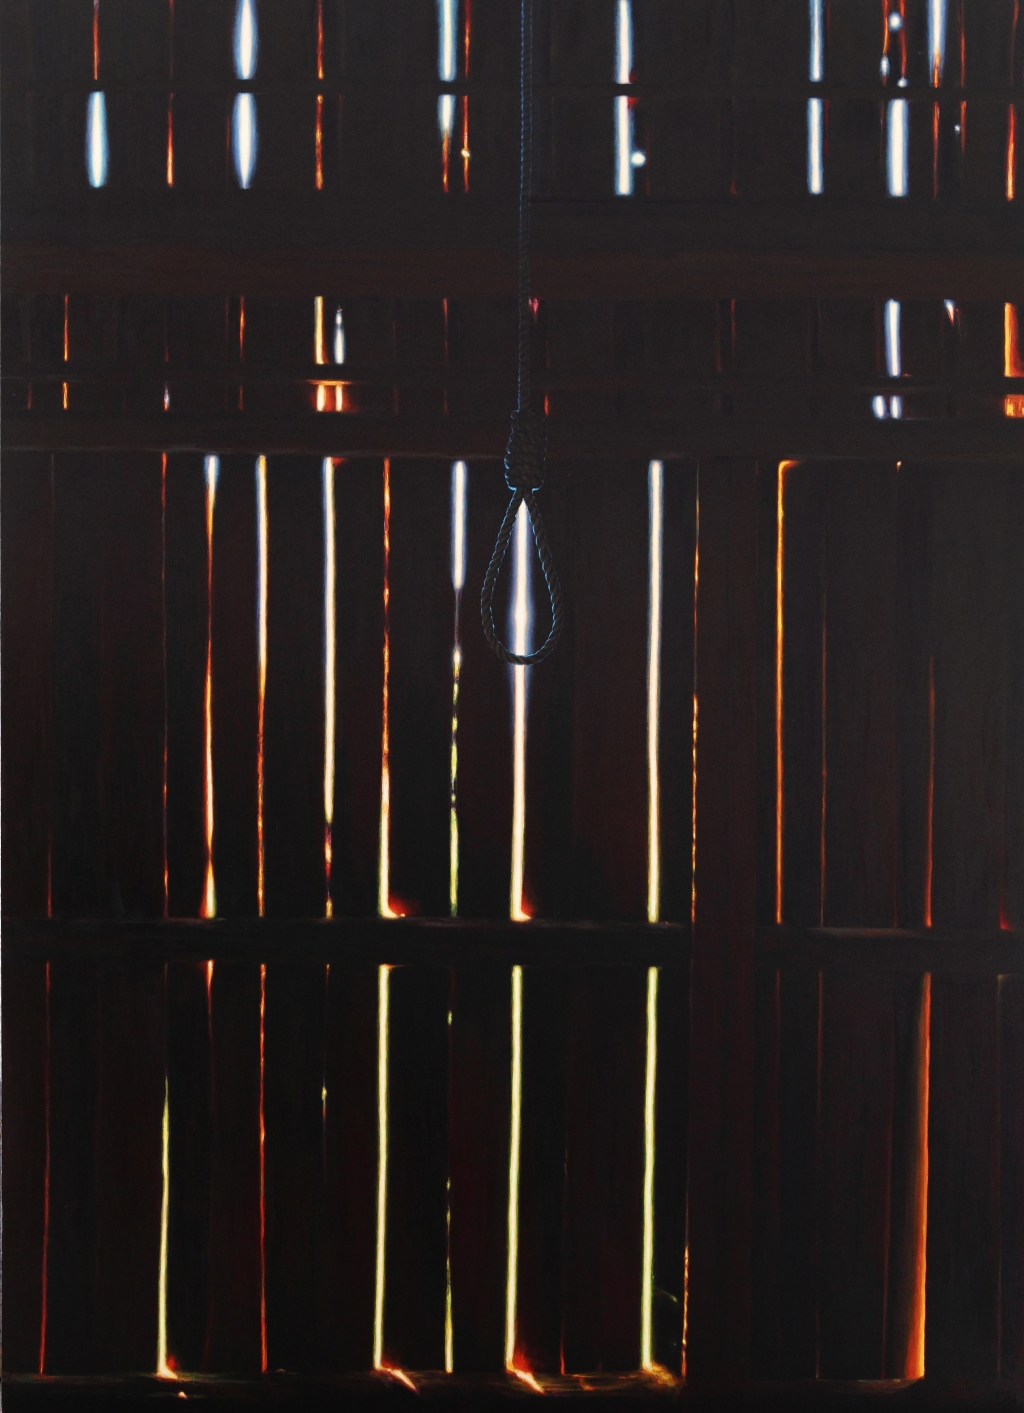 09.07.1572, oil on canvas, 210x150cm, 2011